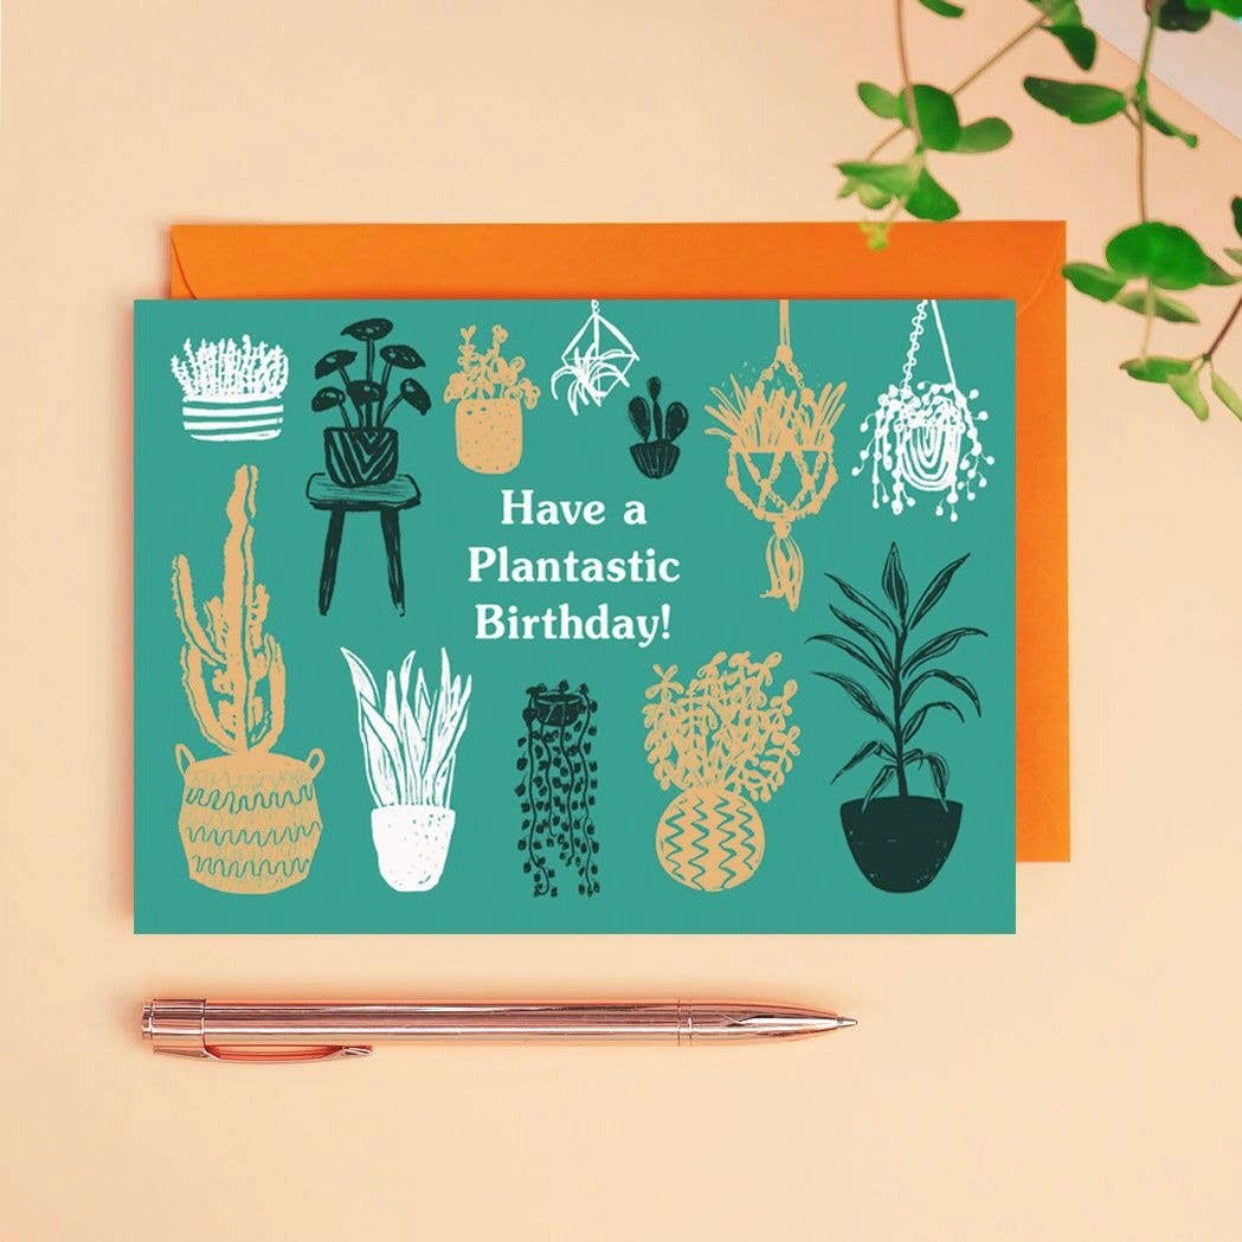 Have a plantastic birthday greeting card